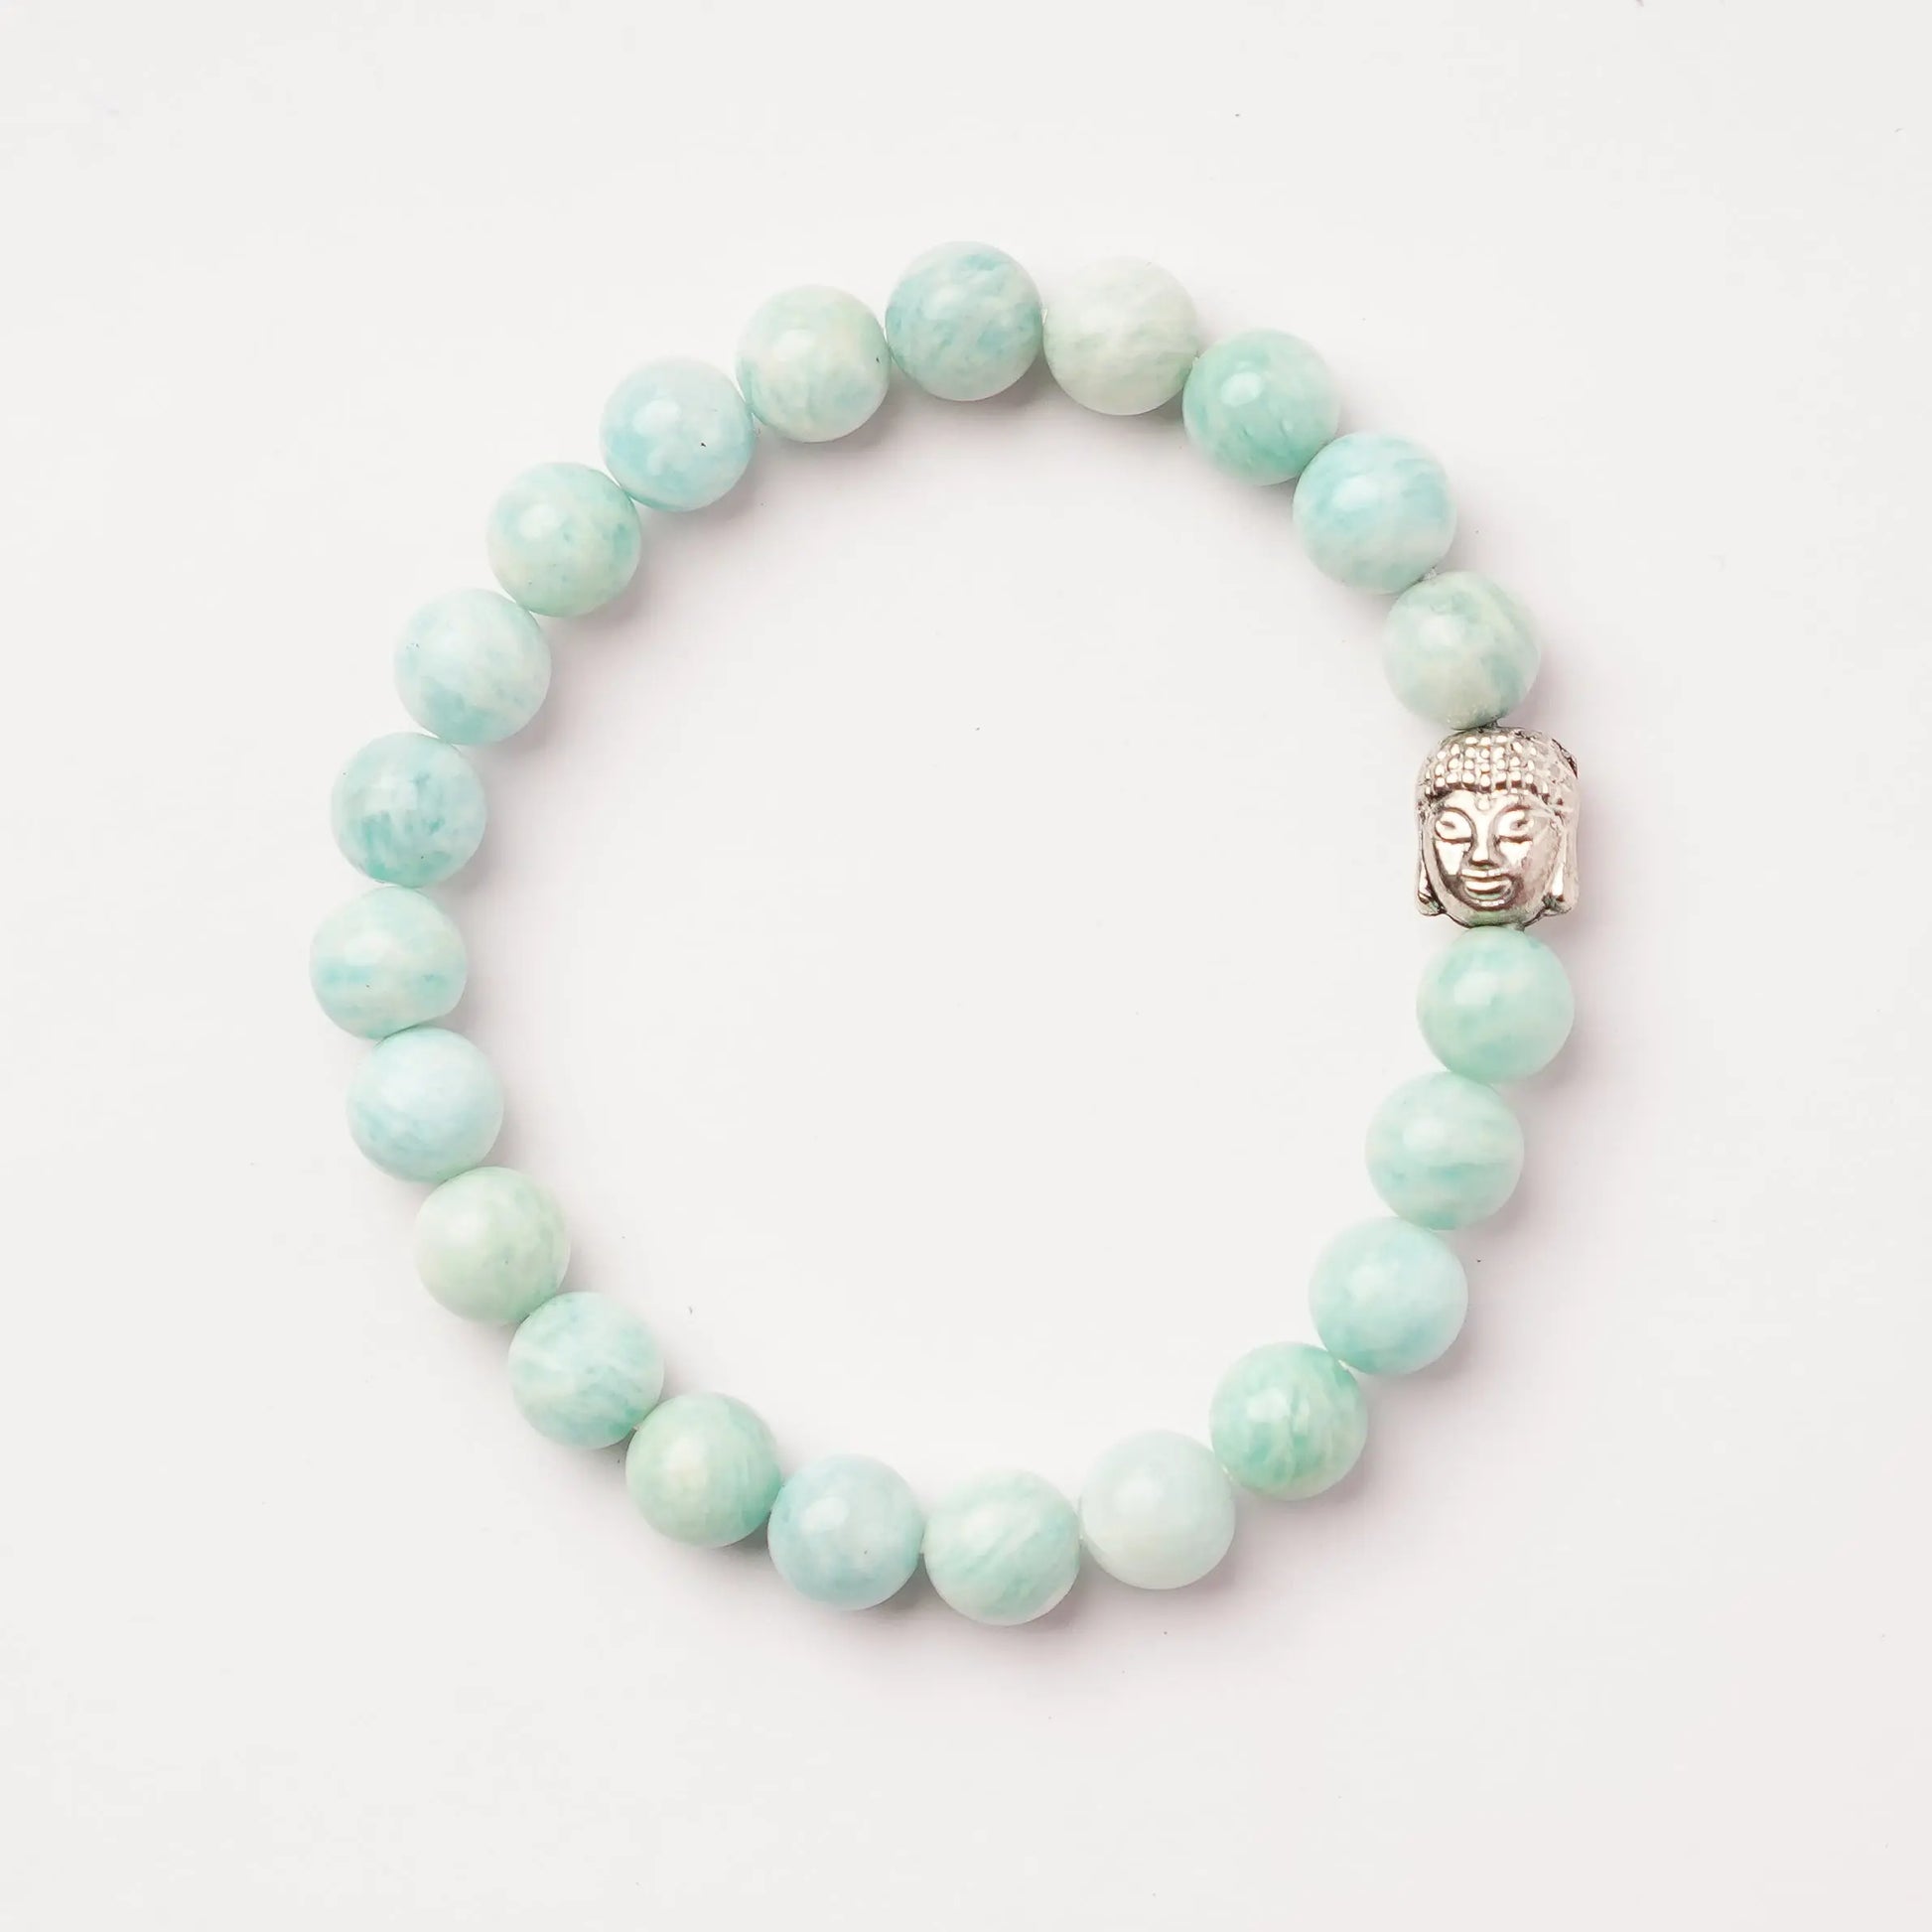 Zen Amazonite Bracelet to Fulfill Ambitions The Zen Crystals